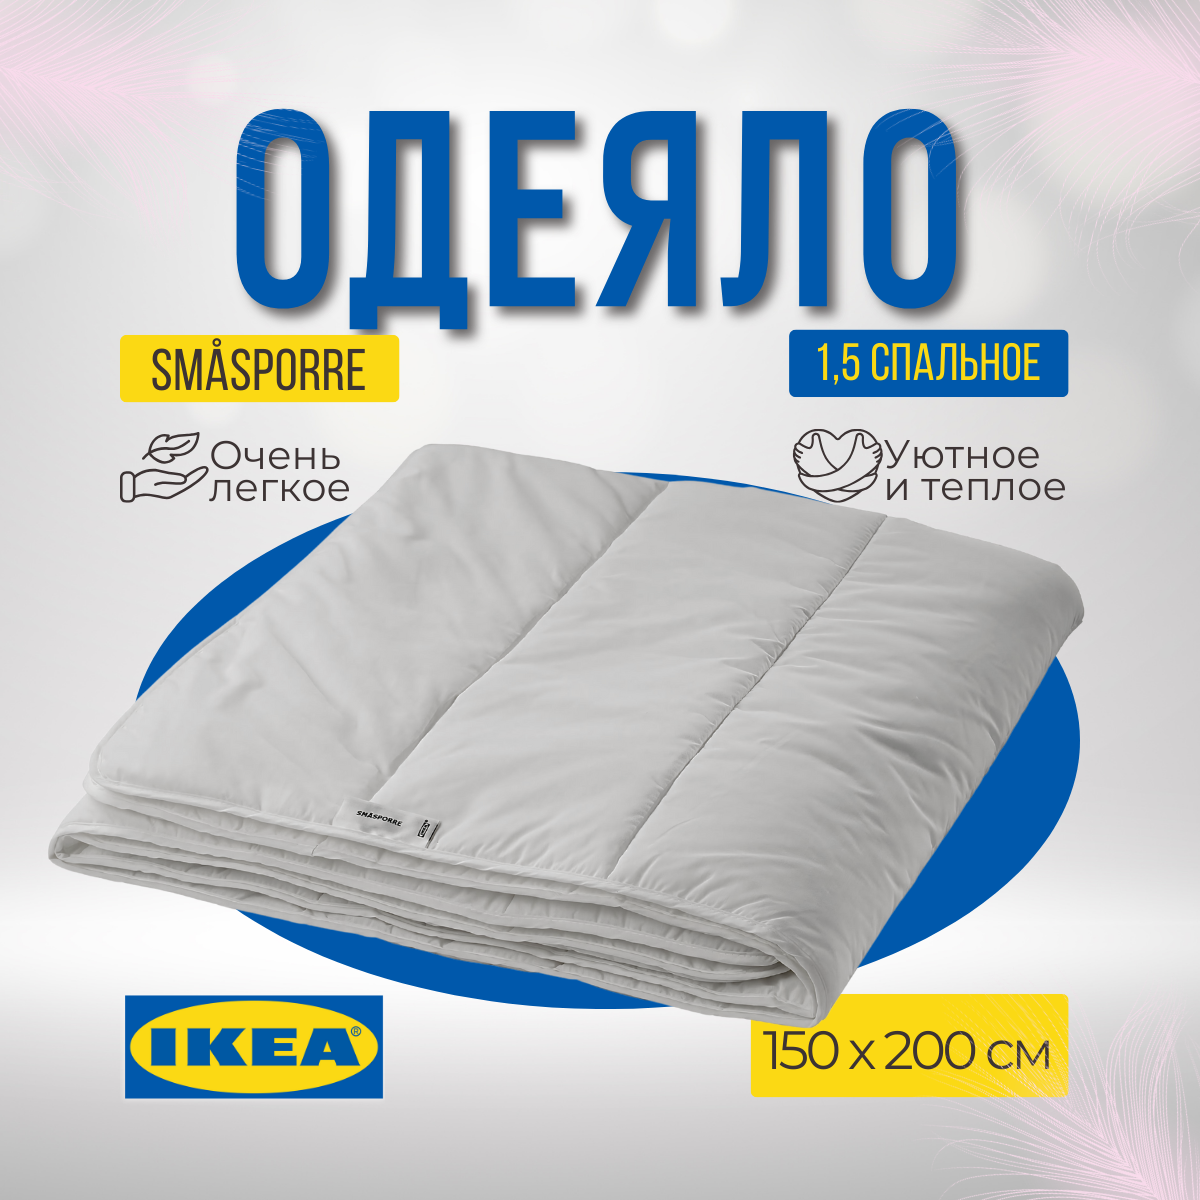 Одеяло икеа смоспорре легкое, 150 х 200 см, белый